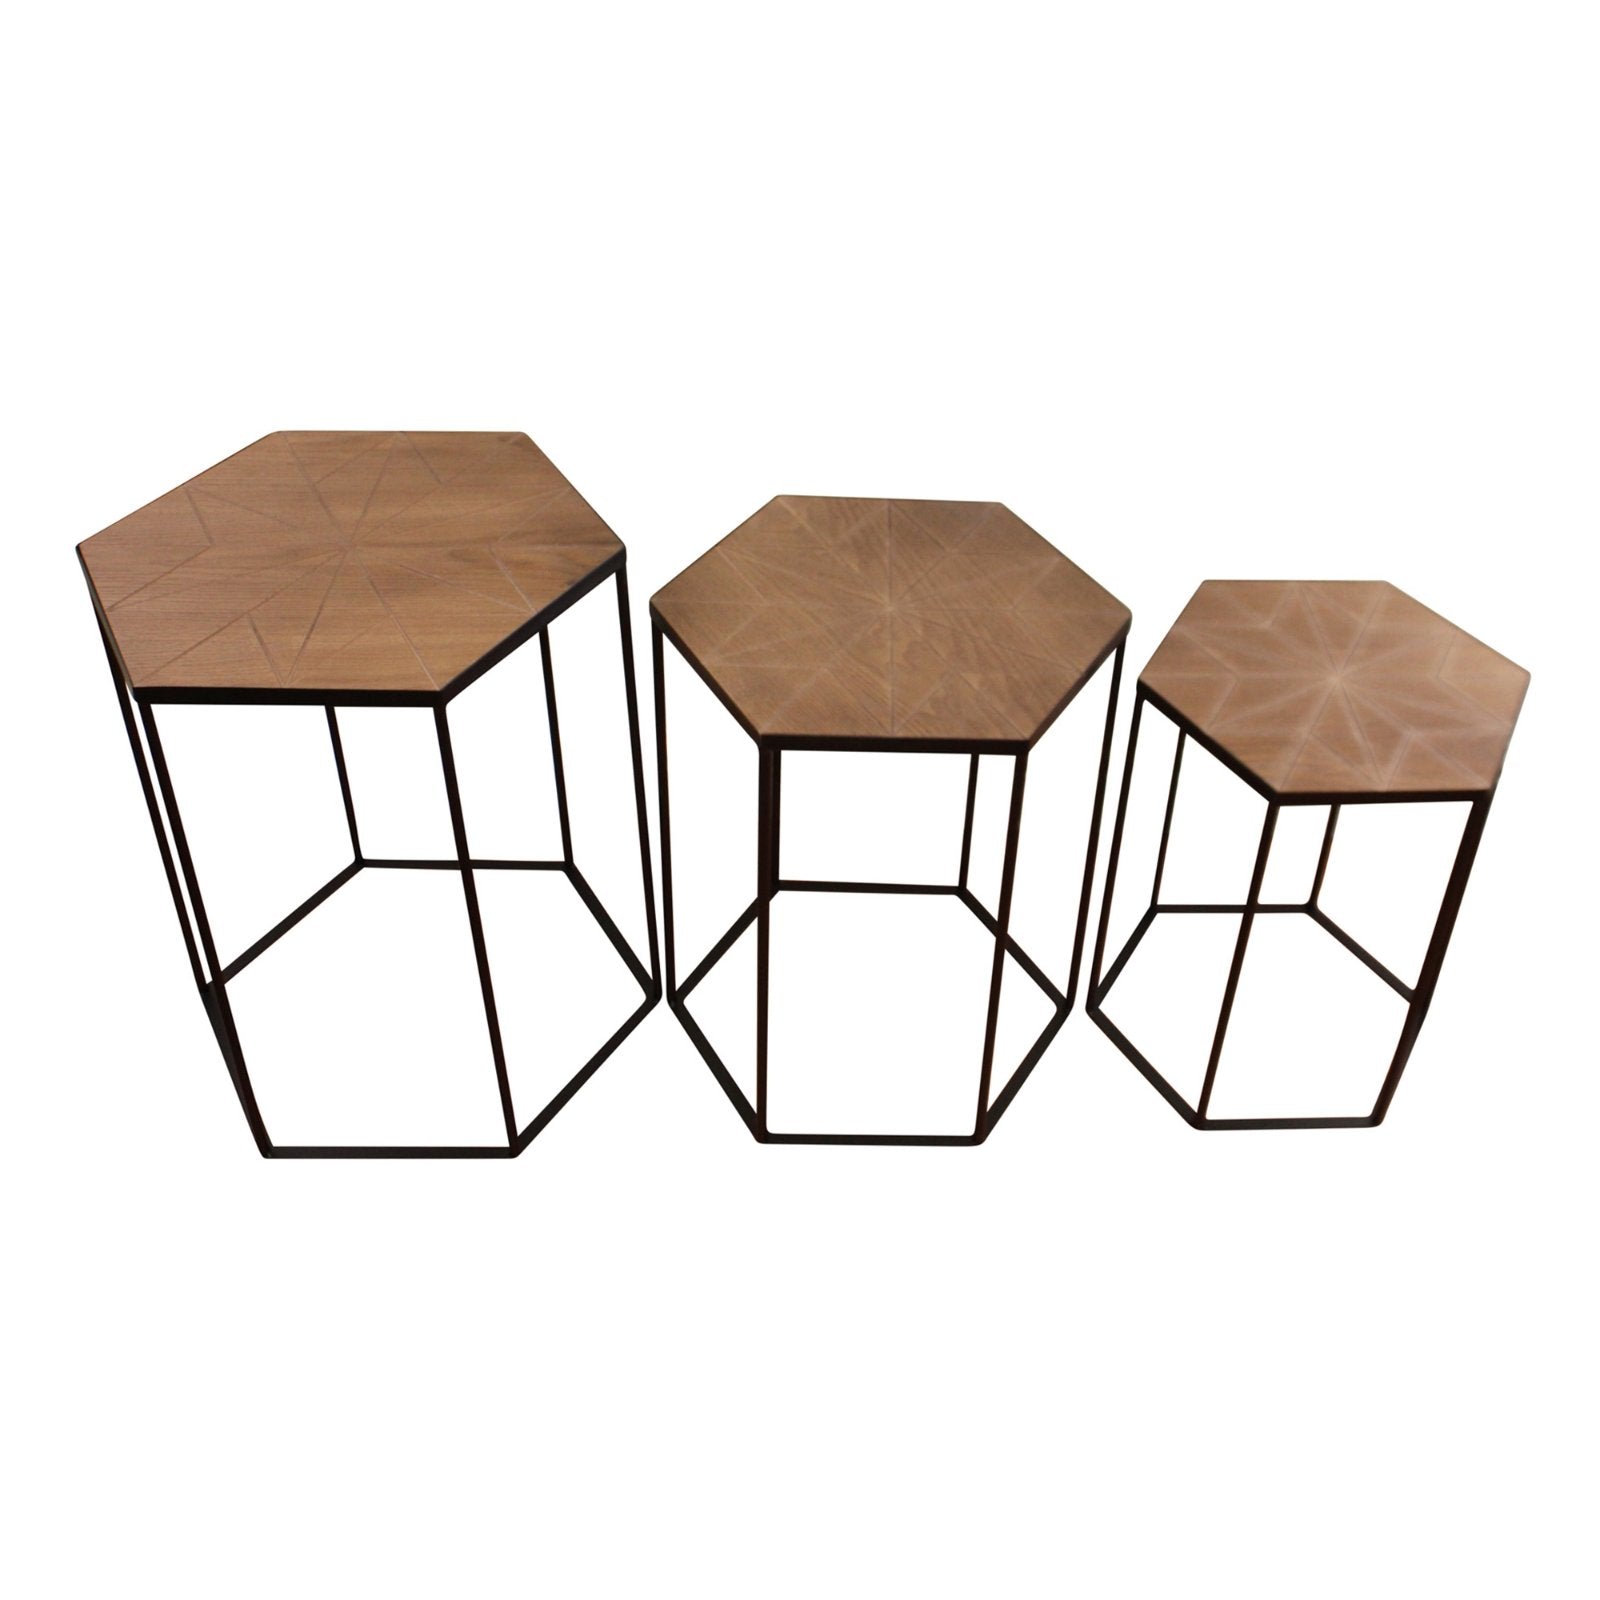 Set Of 3 Black Metal And Wood Hexagonal Side Tables